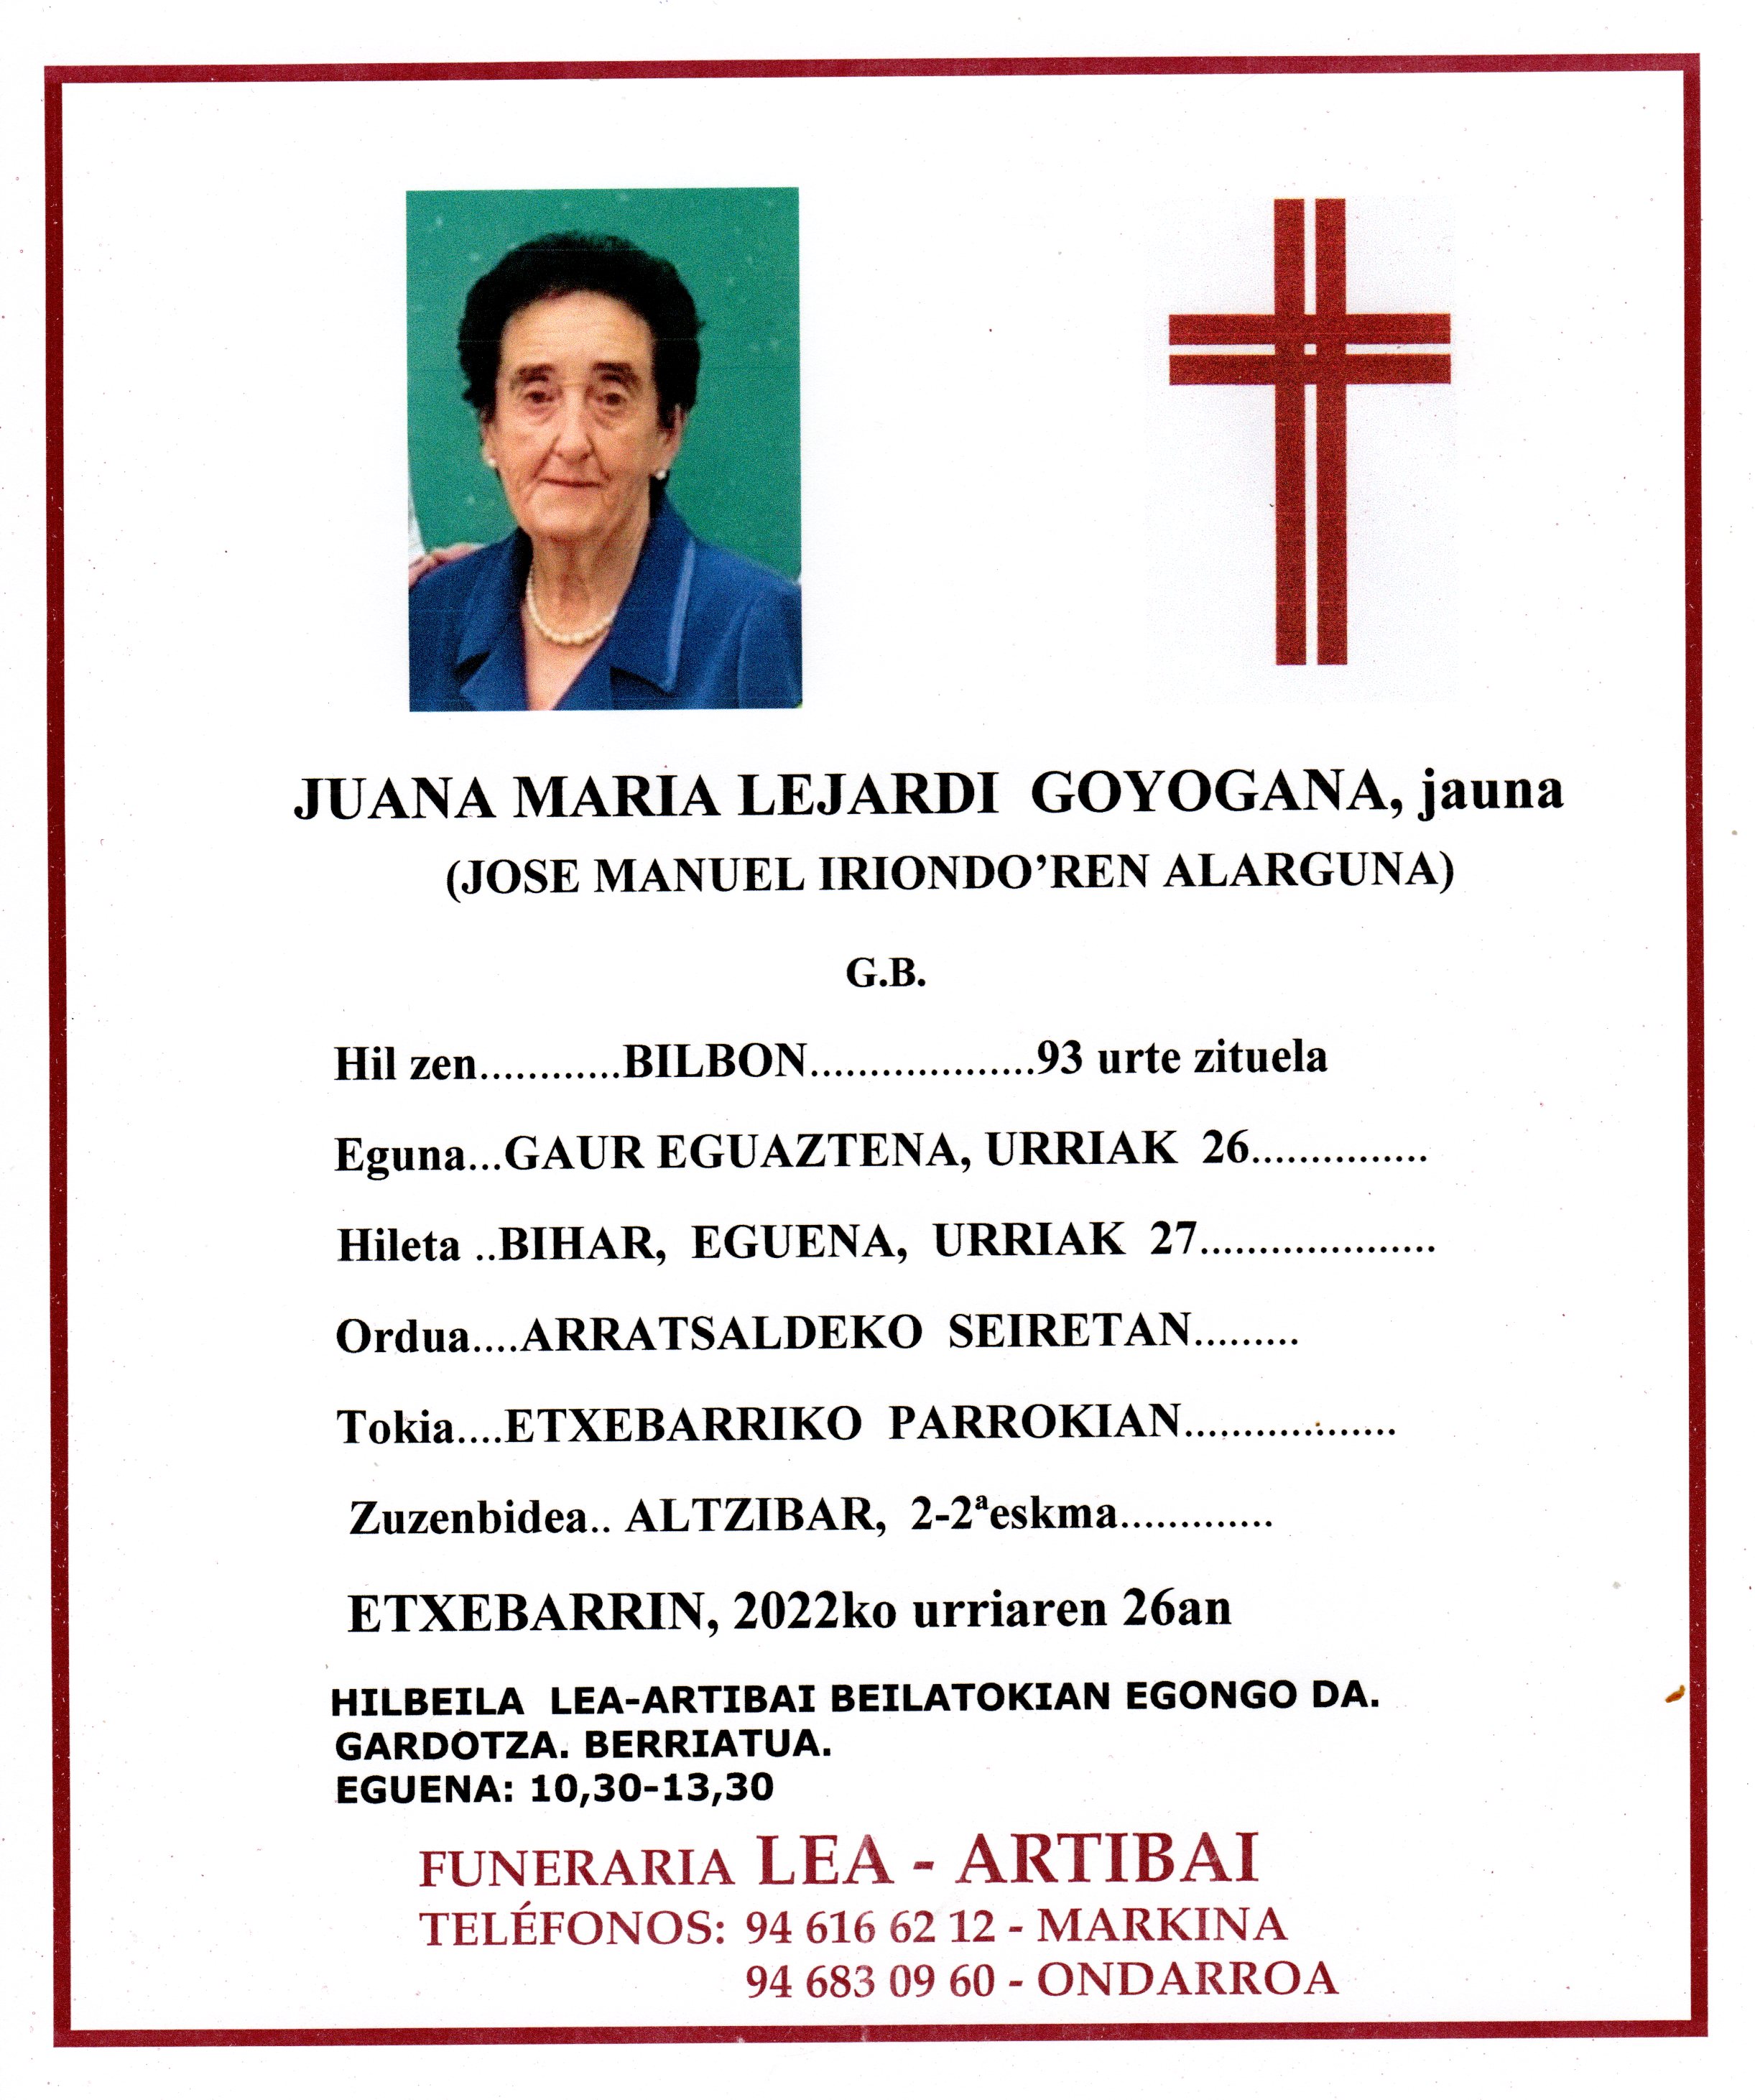 Juana Maria Lejardi Goyogana